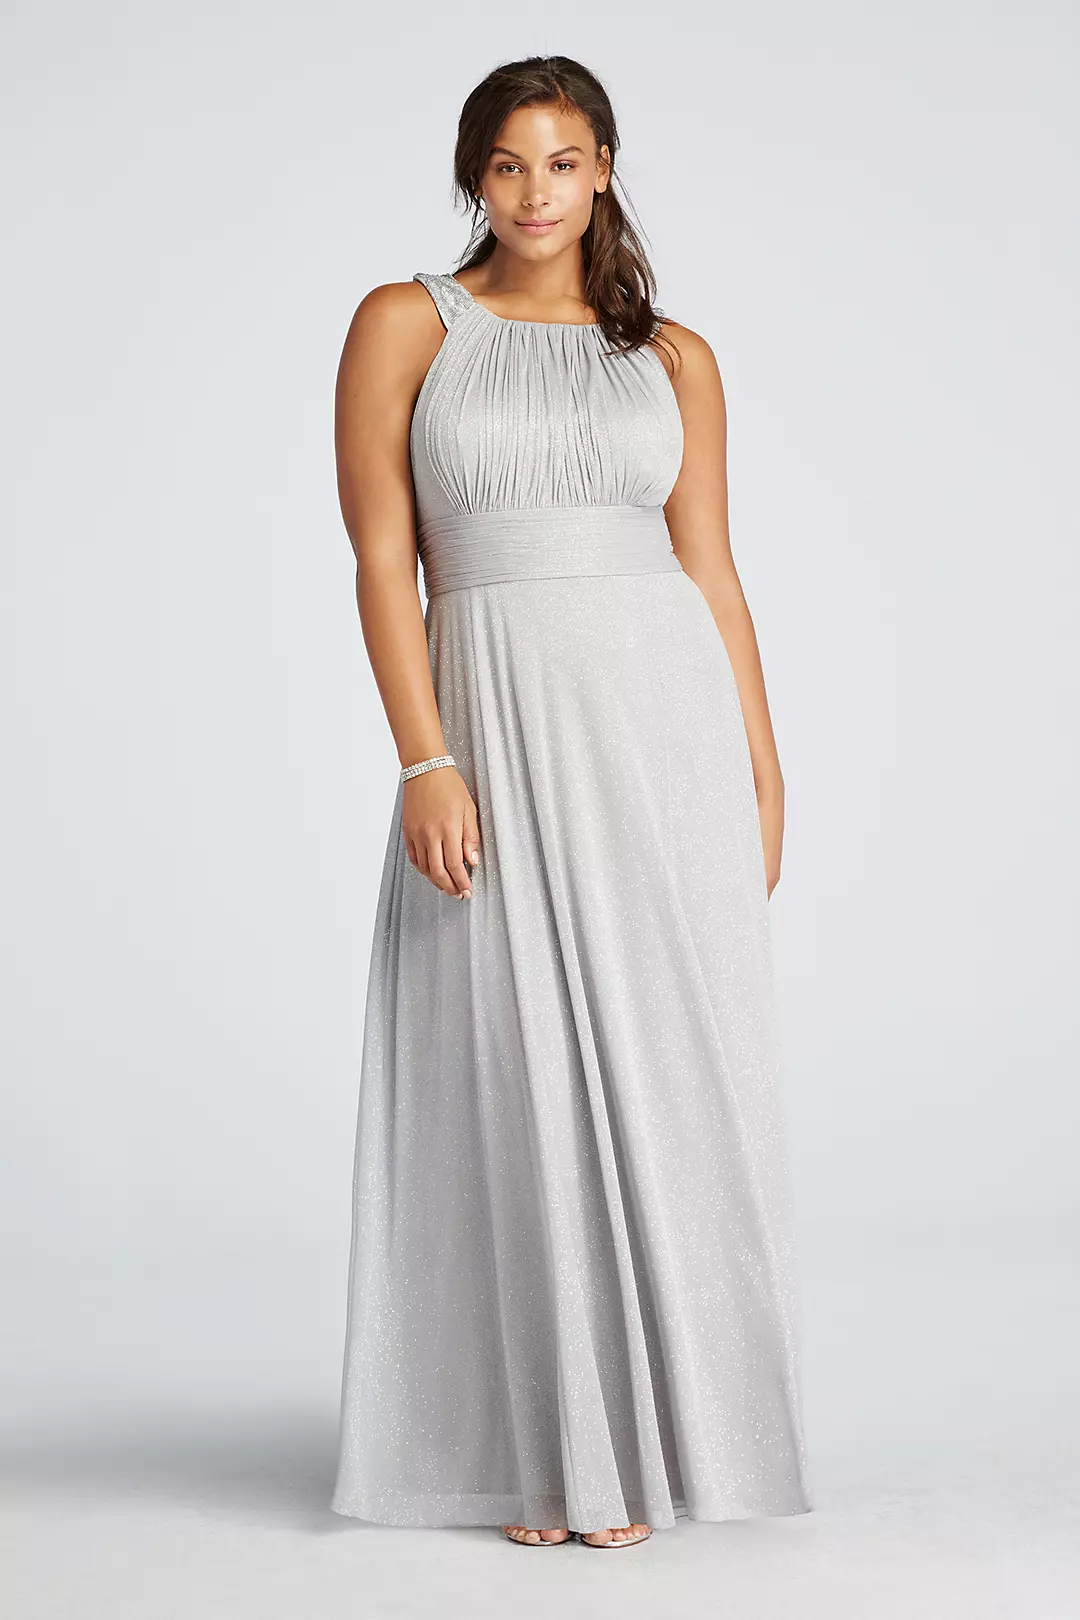 Sleeveless Glitter Jersey Dress with Beaded Straps Image